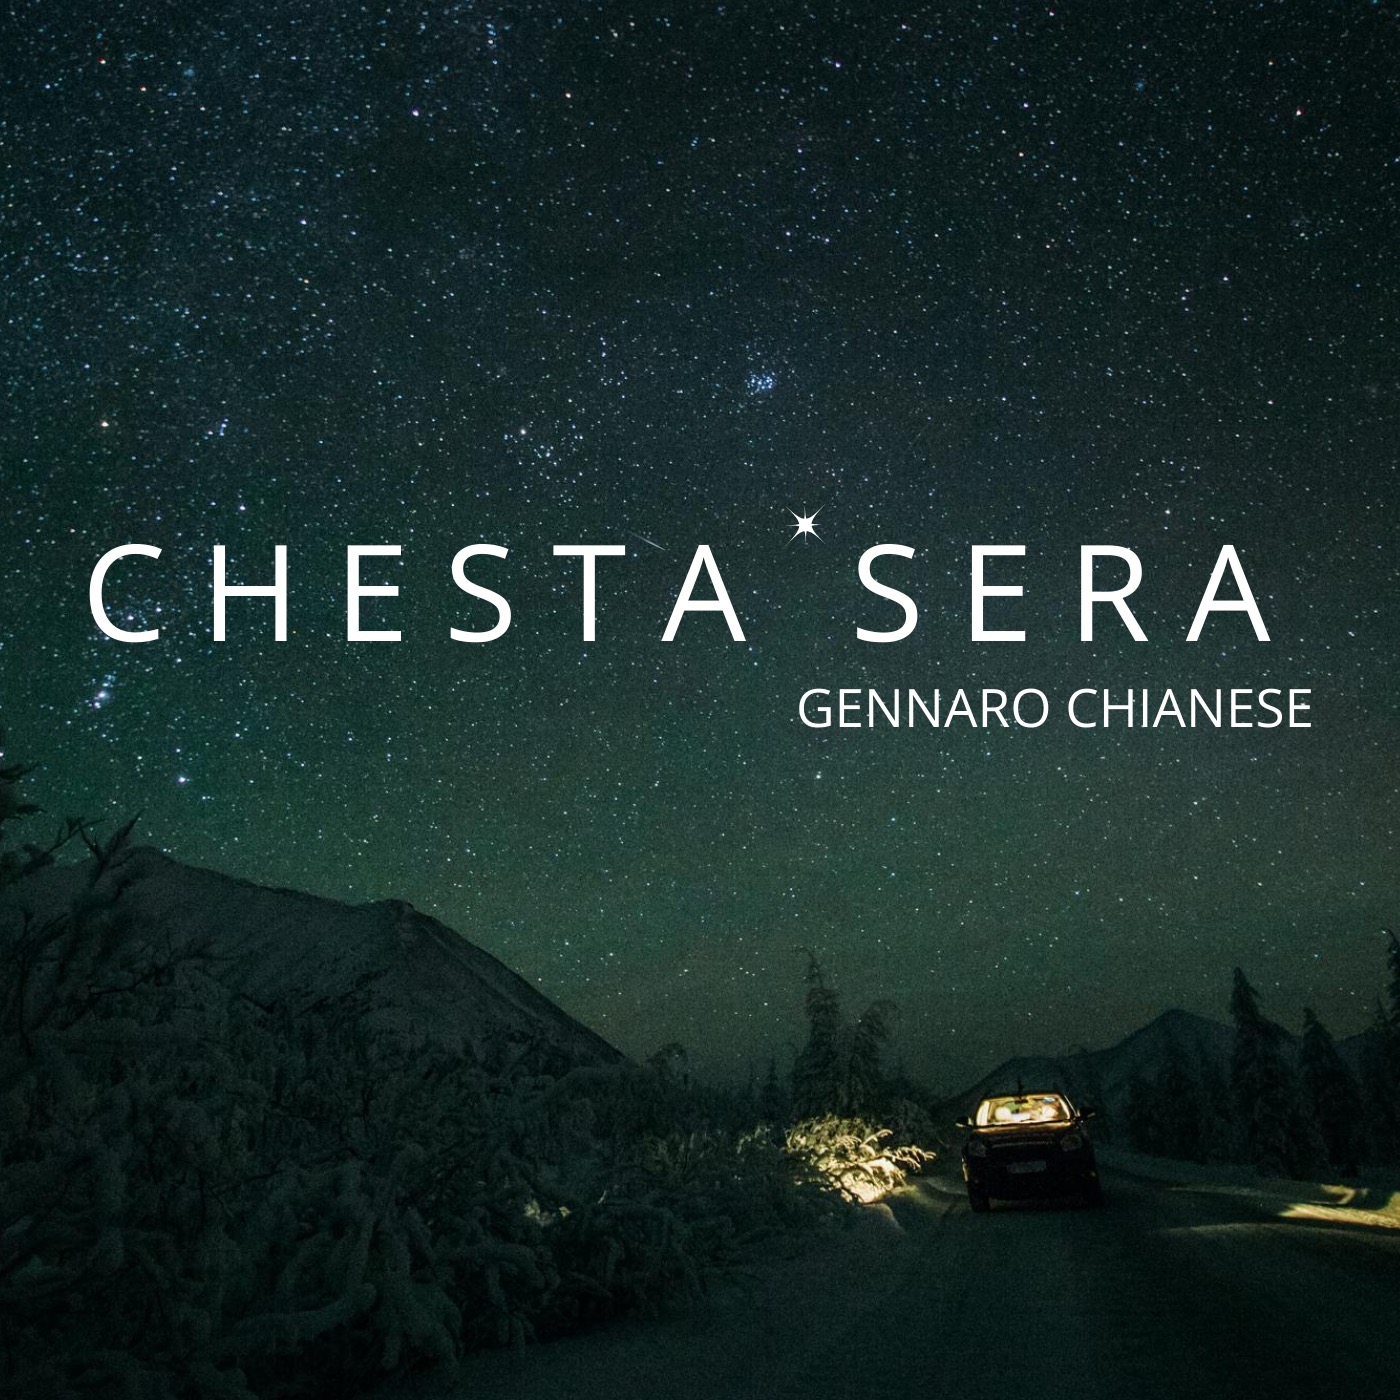 Art for Chesta Sera by Gennaro Chianese